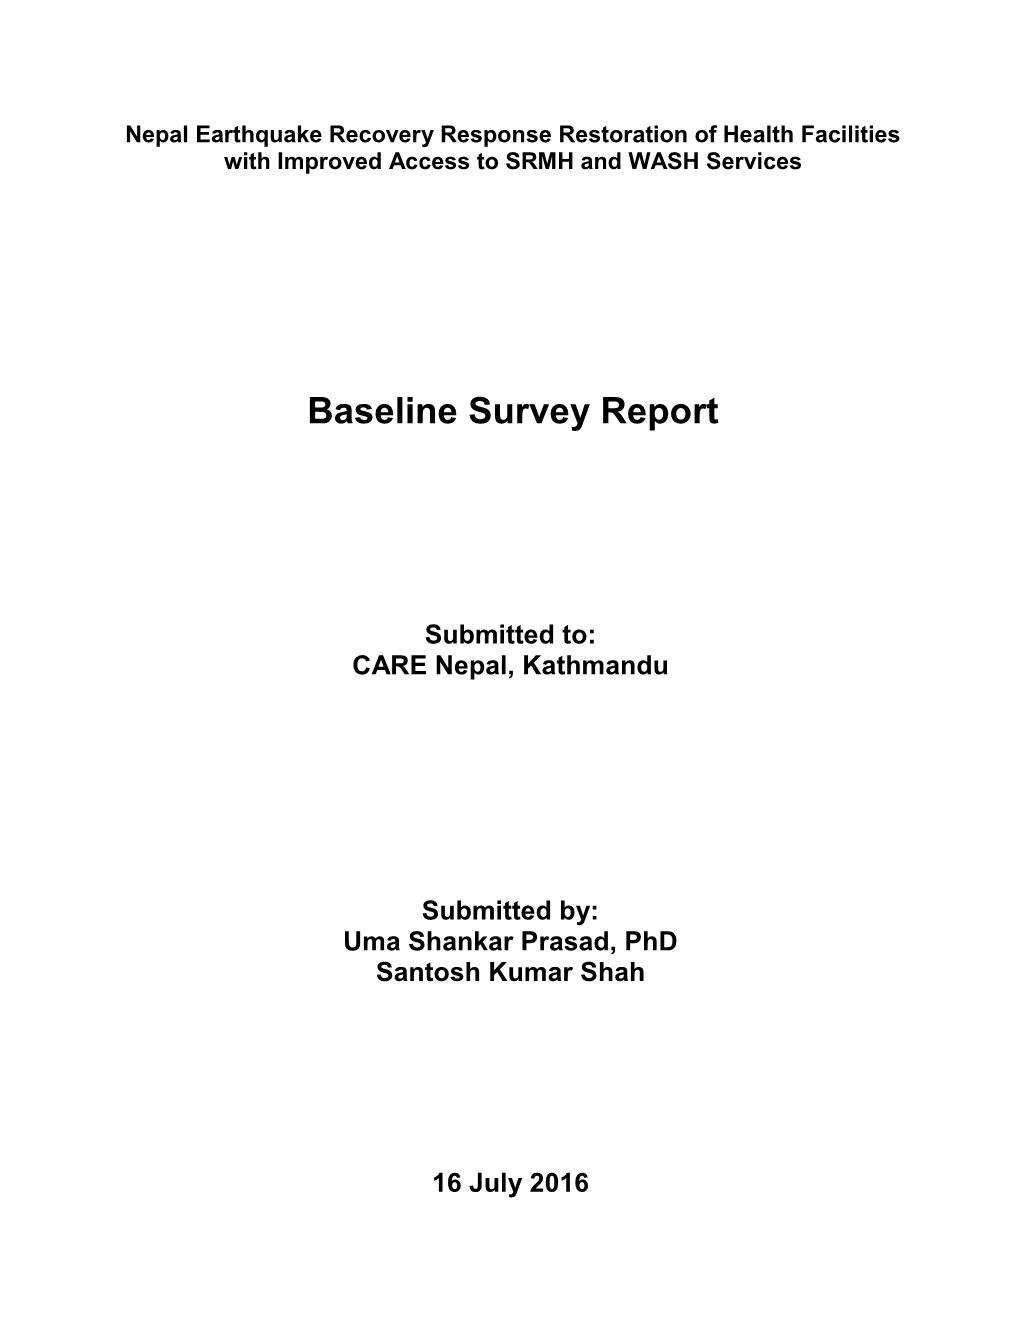 Baseline Survey Report